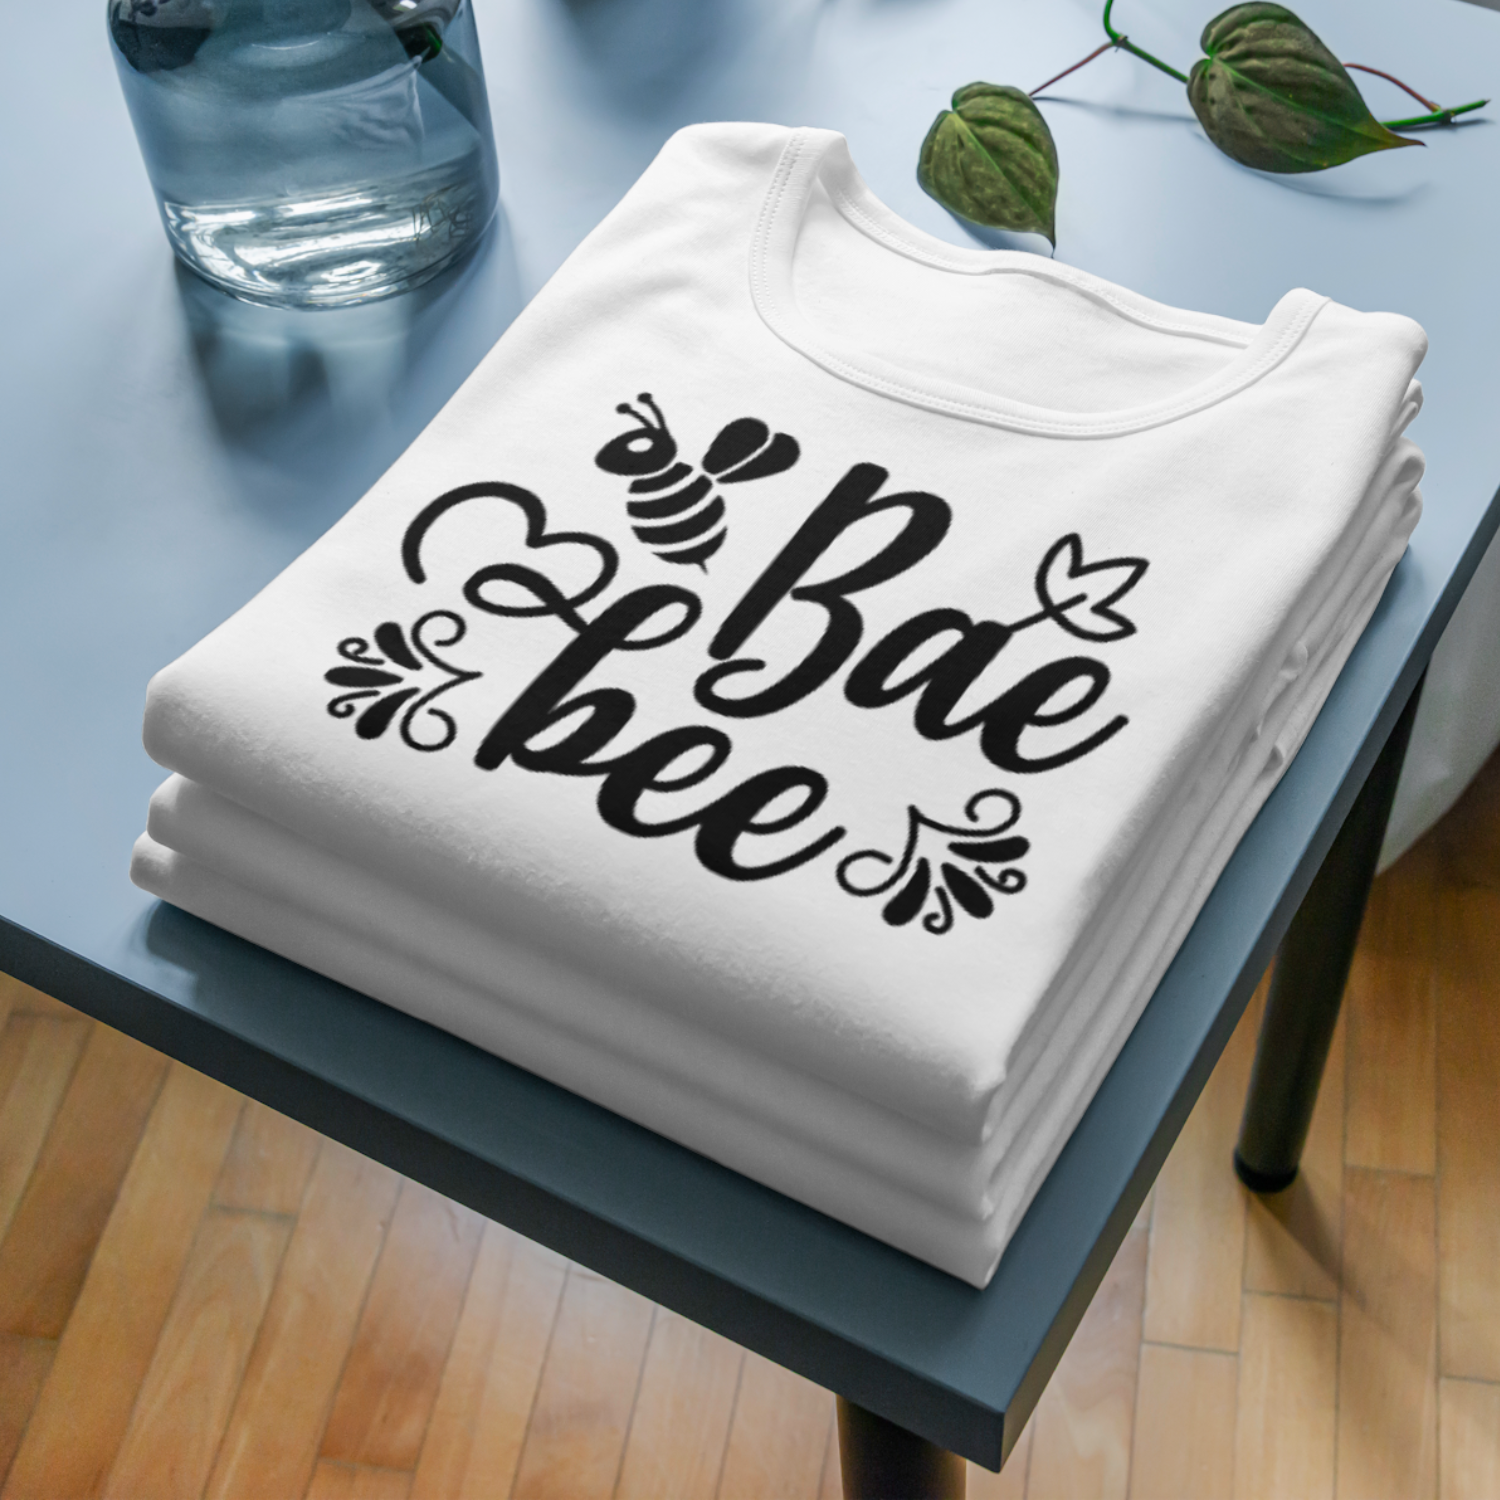 Bae Bee SVG | Digital Download | Cut File | SVG